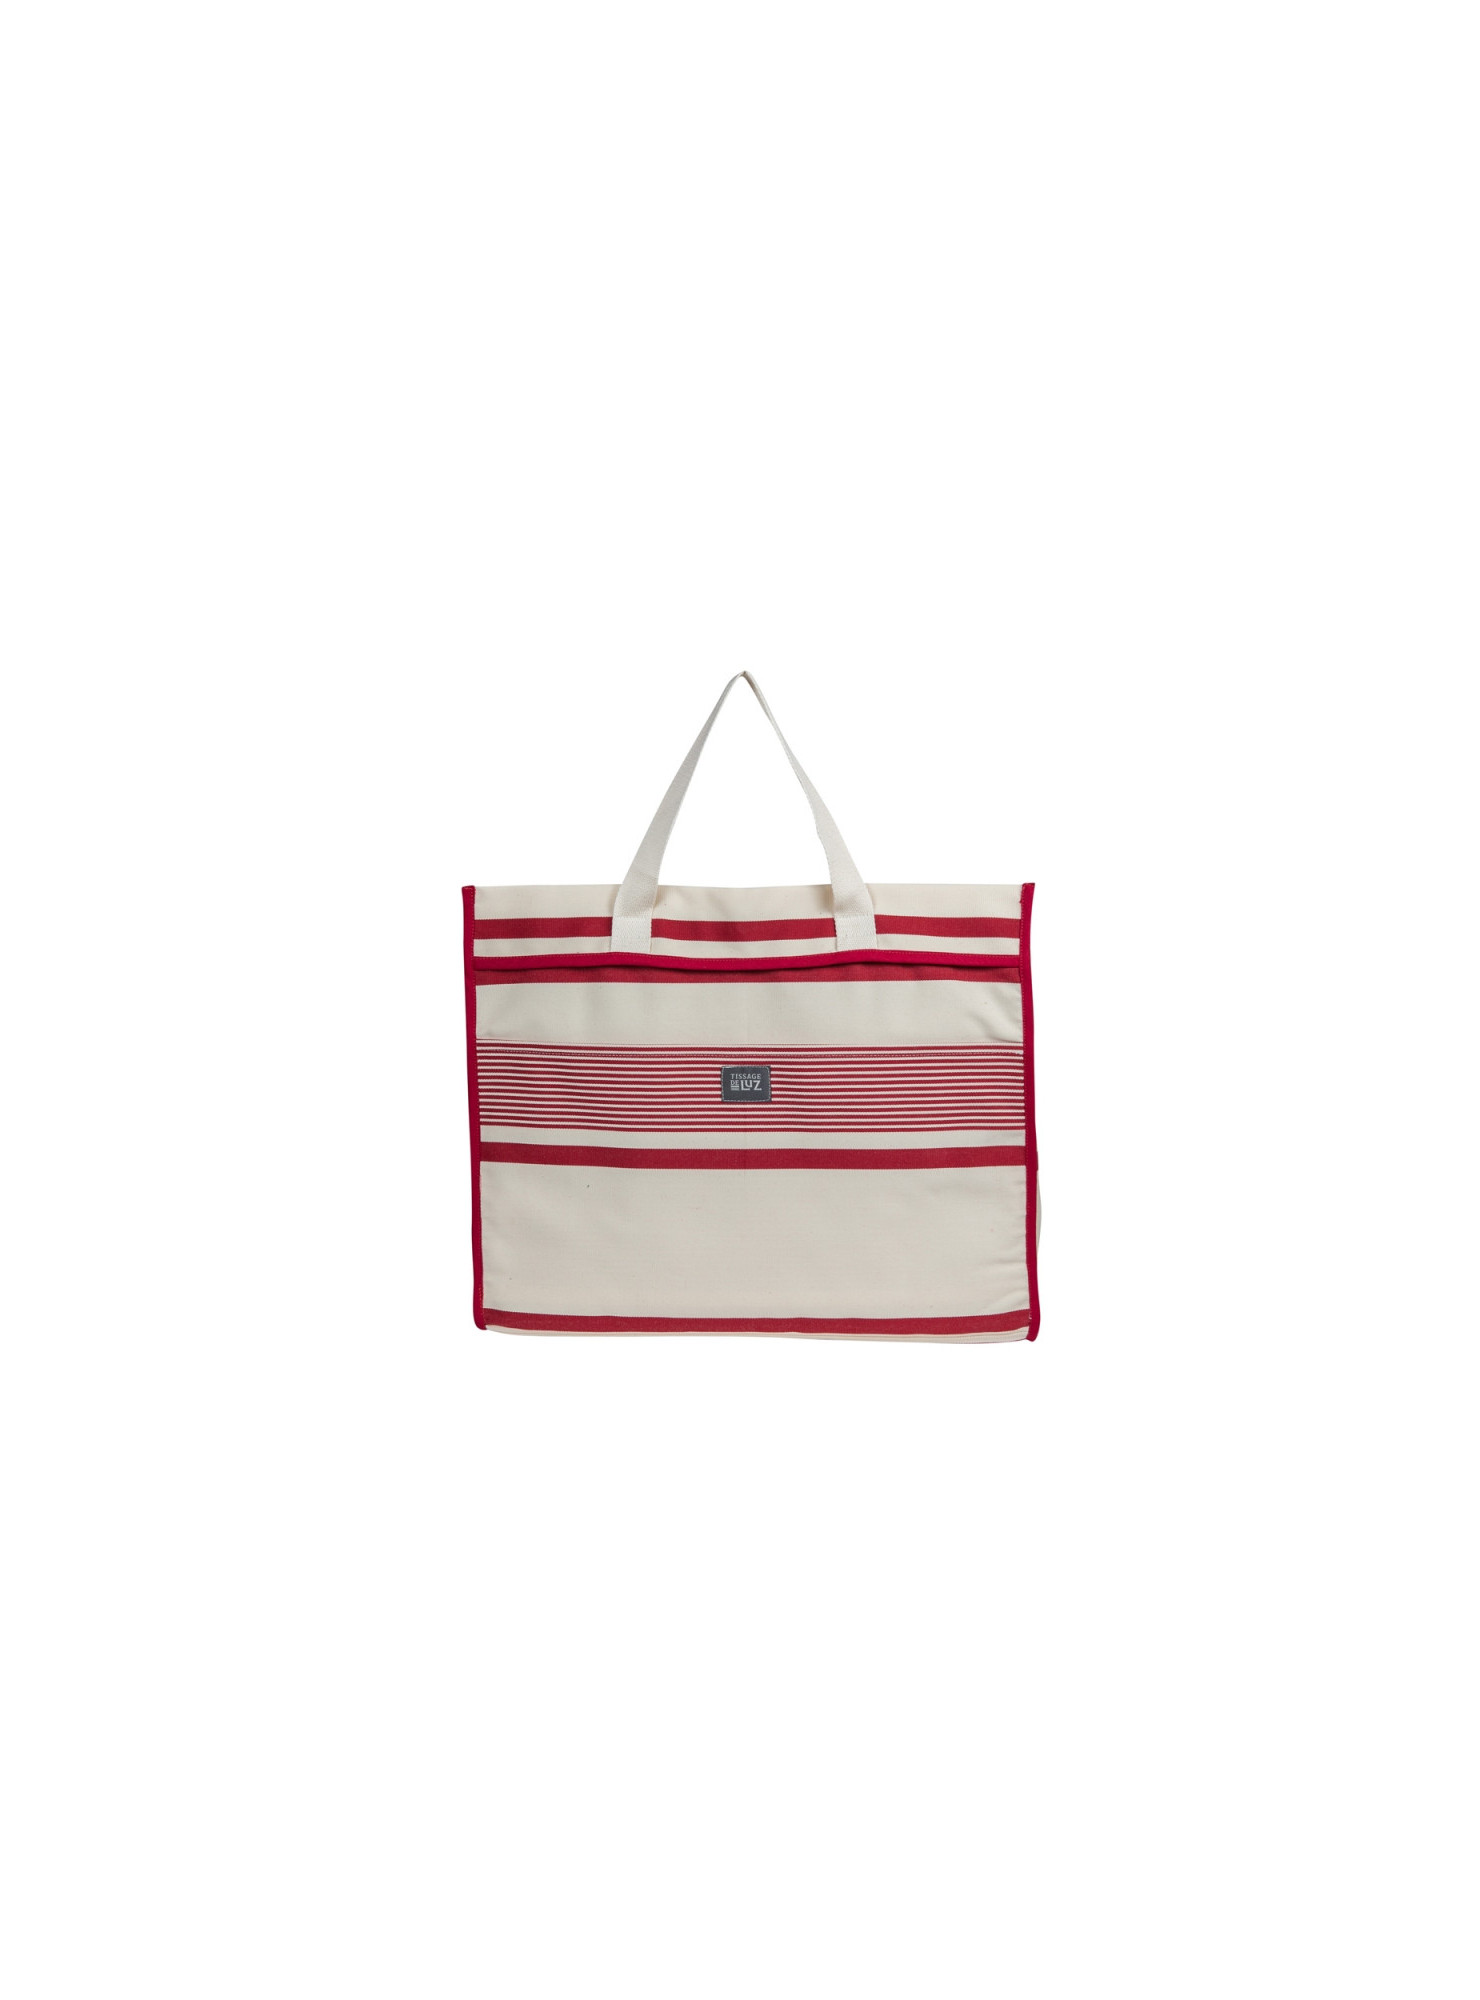 Sac Véra Maïté Rouge handbag, basque linen 